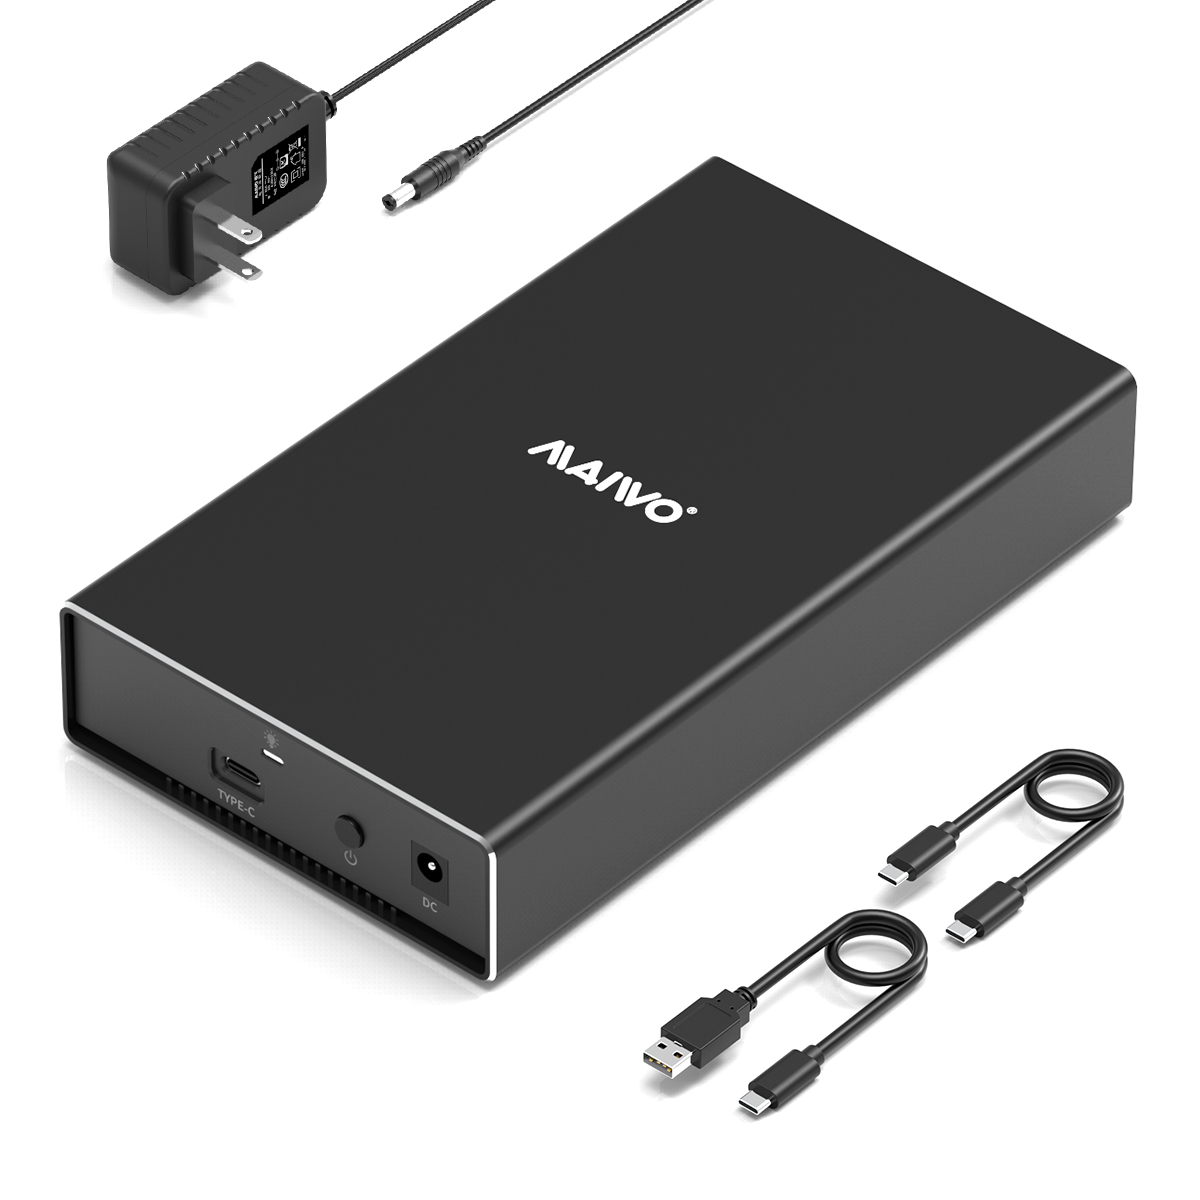 MAIWO K3527SAS External SAS Hard Drive Enclosure USB Type C to SAS Adapter for 2.5"/3.5" S